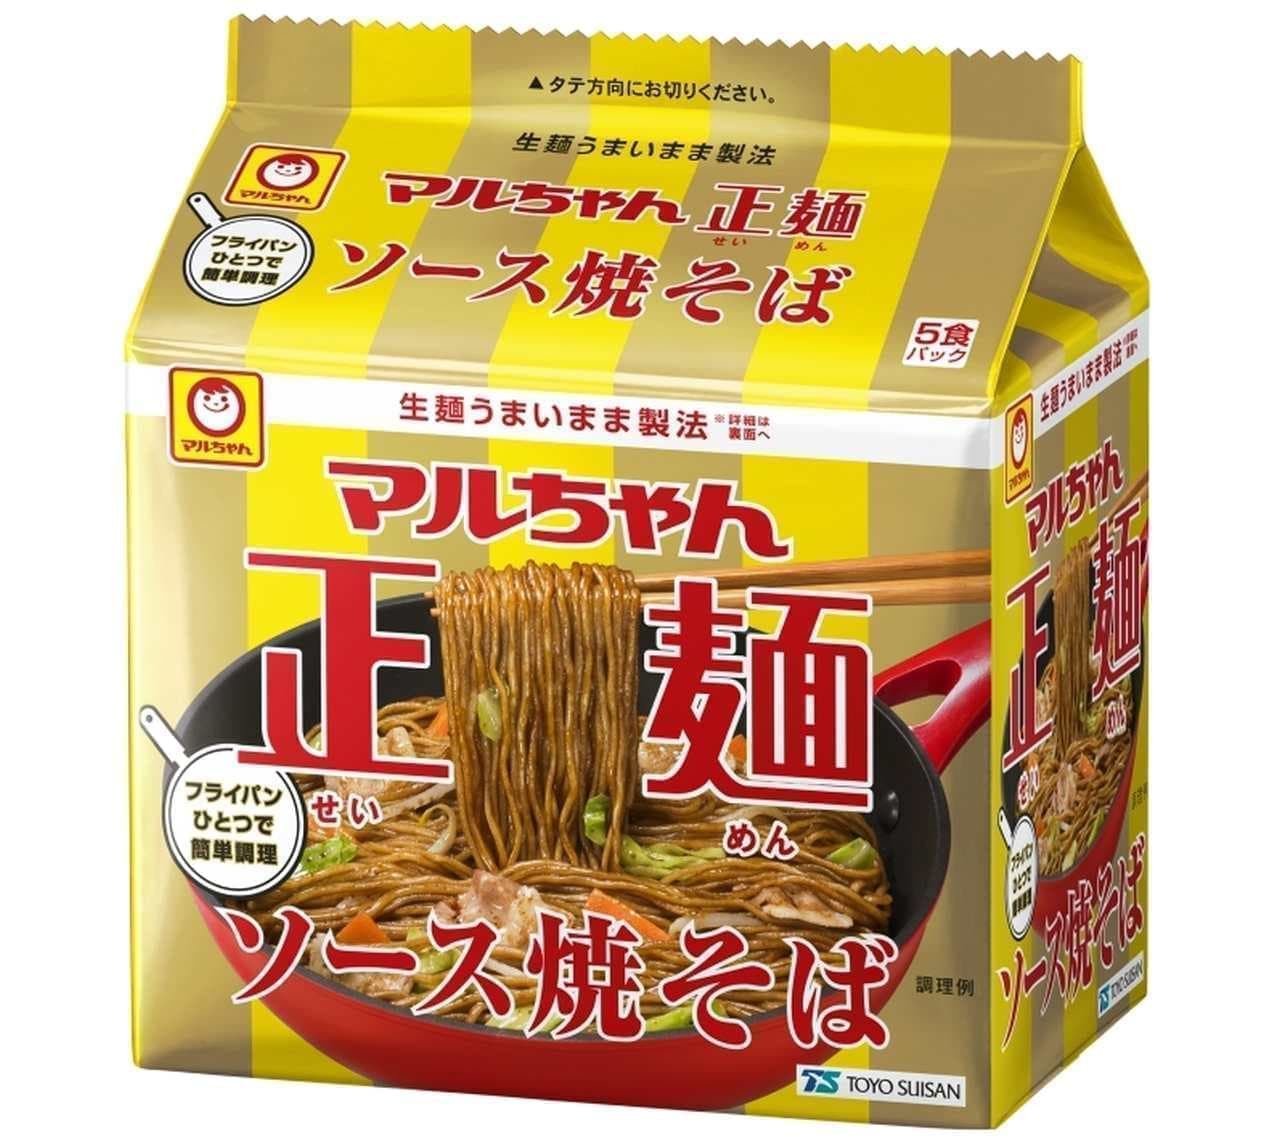 "Sauce Yakisoba" from Maruchan Seimen